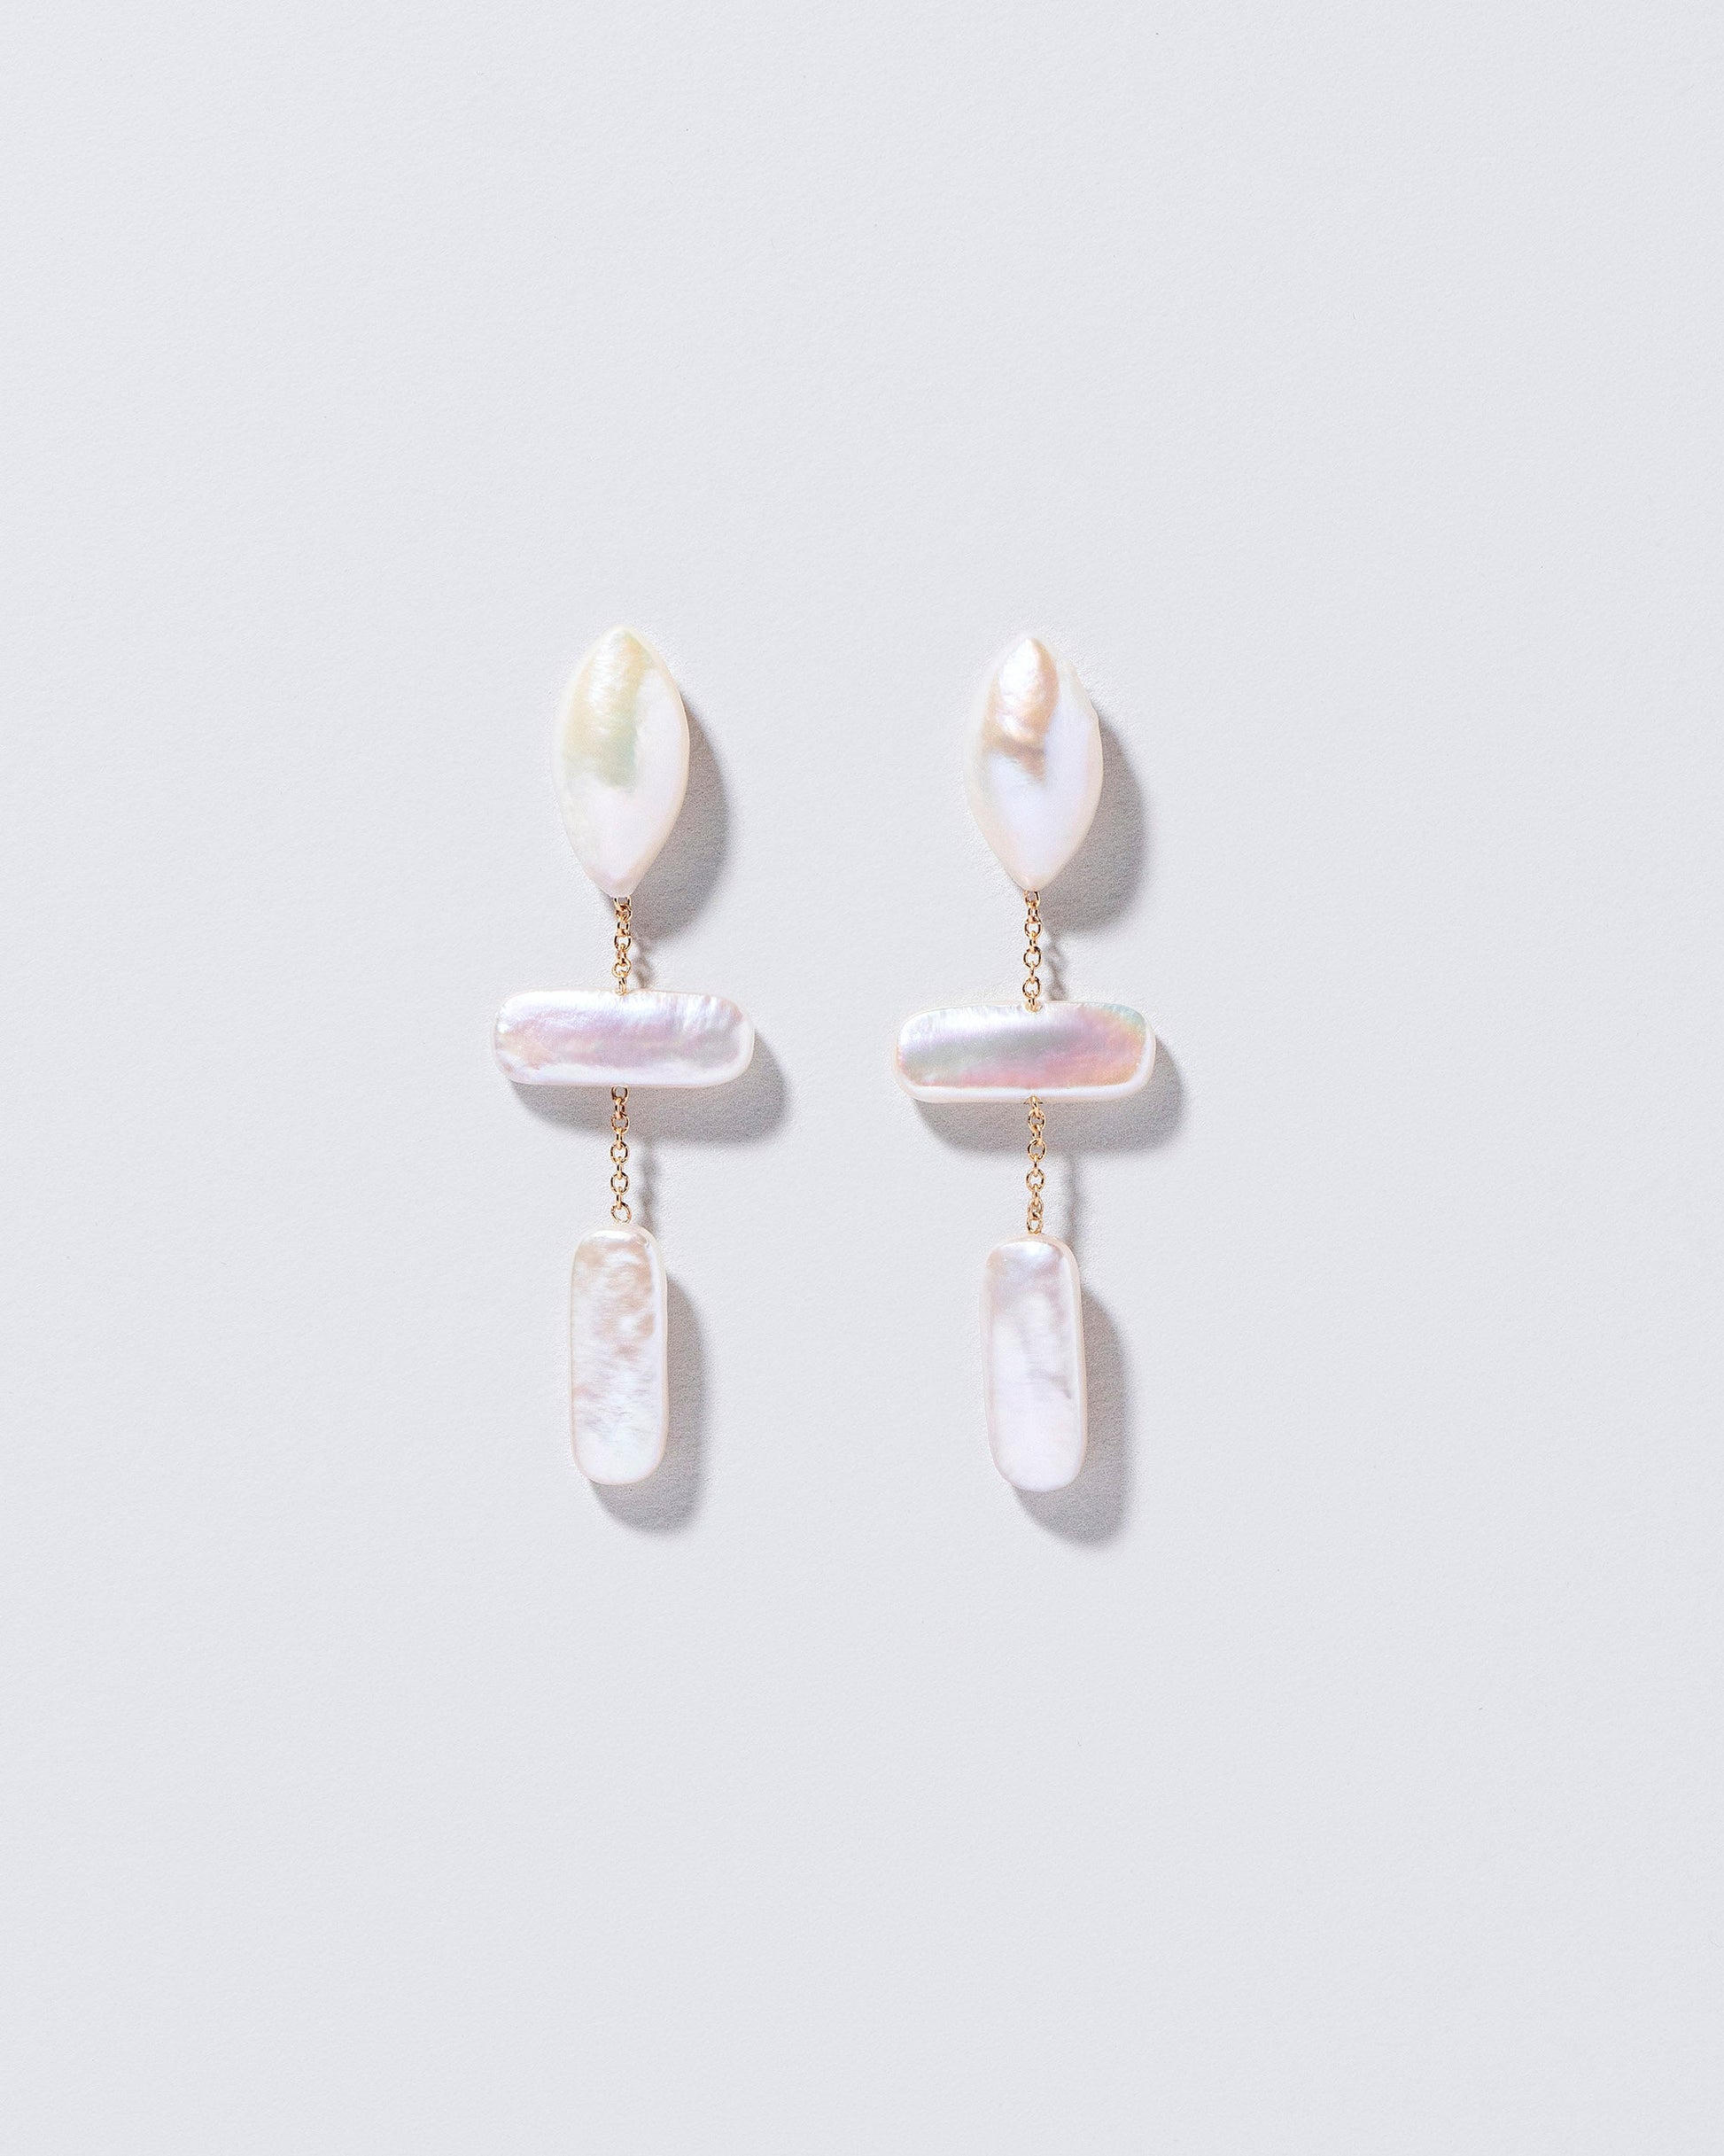  Nauplius Earrings on light color background.